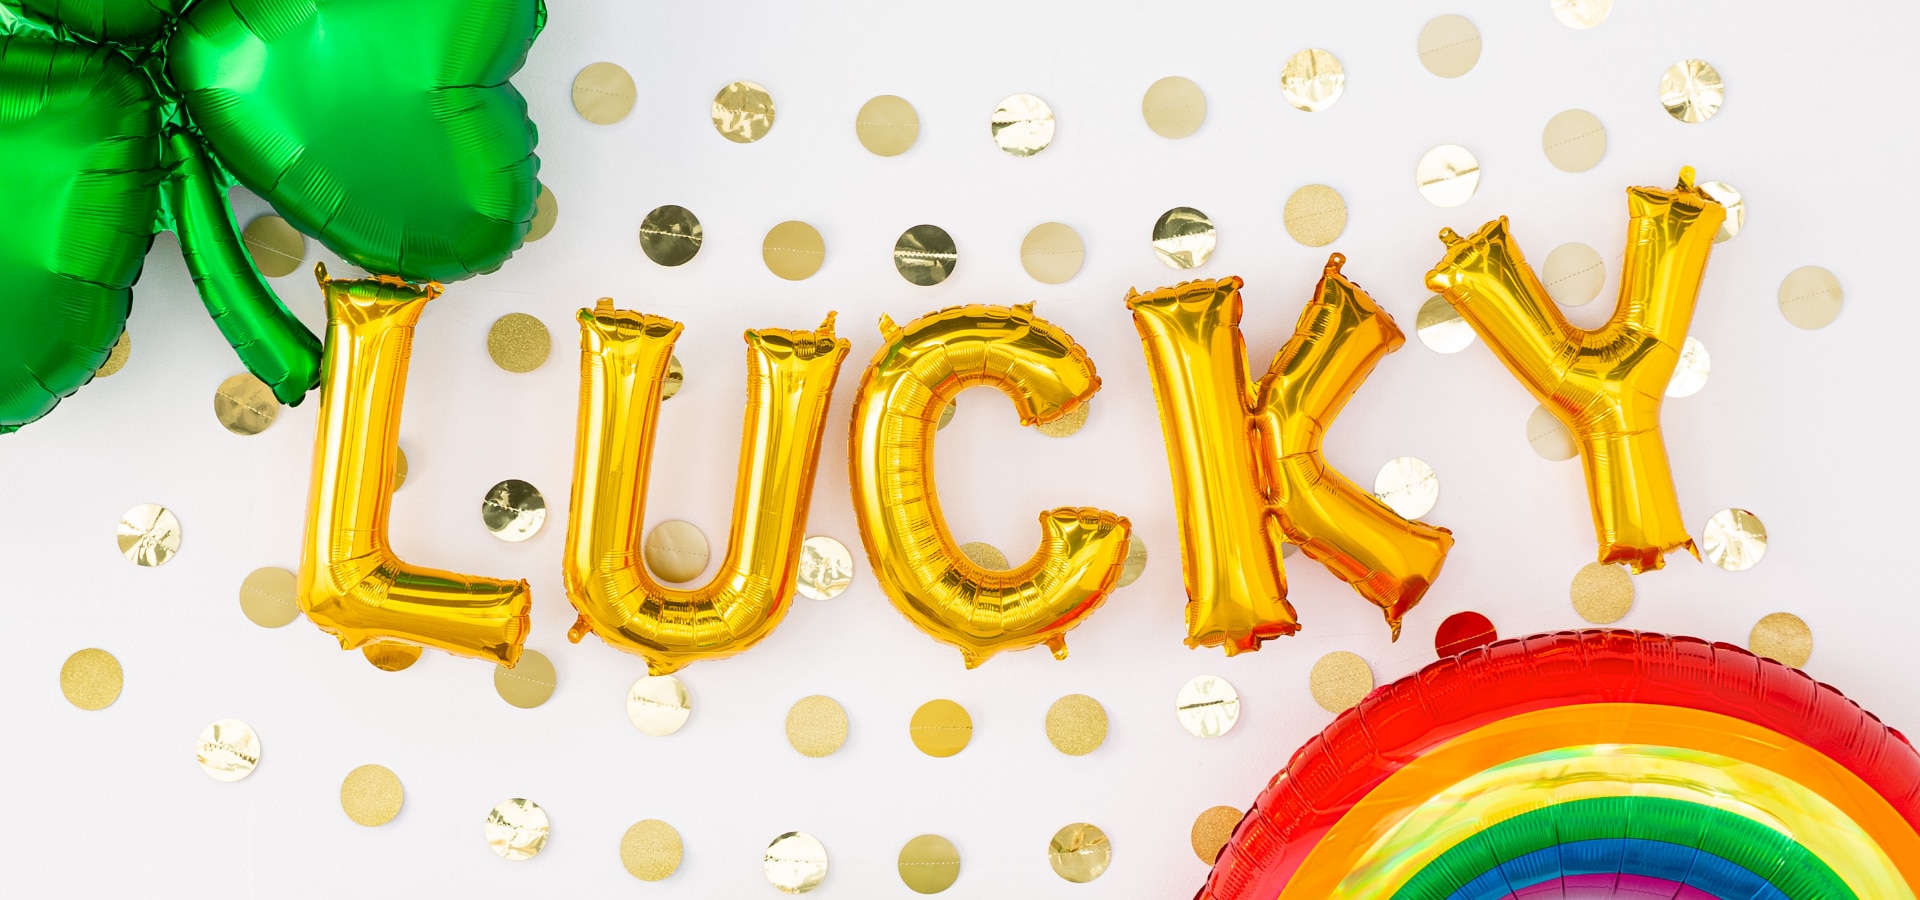 Ballons dorés en forme de lettres épelant « Lucky », un ballon en aluminium vert en forme de trèfle et un ballon en forme d’arc-en-ciel.